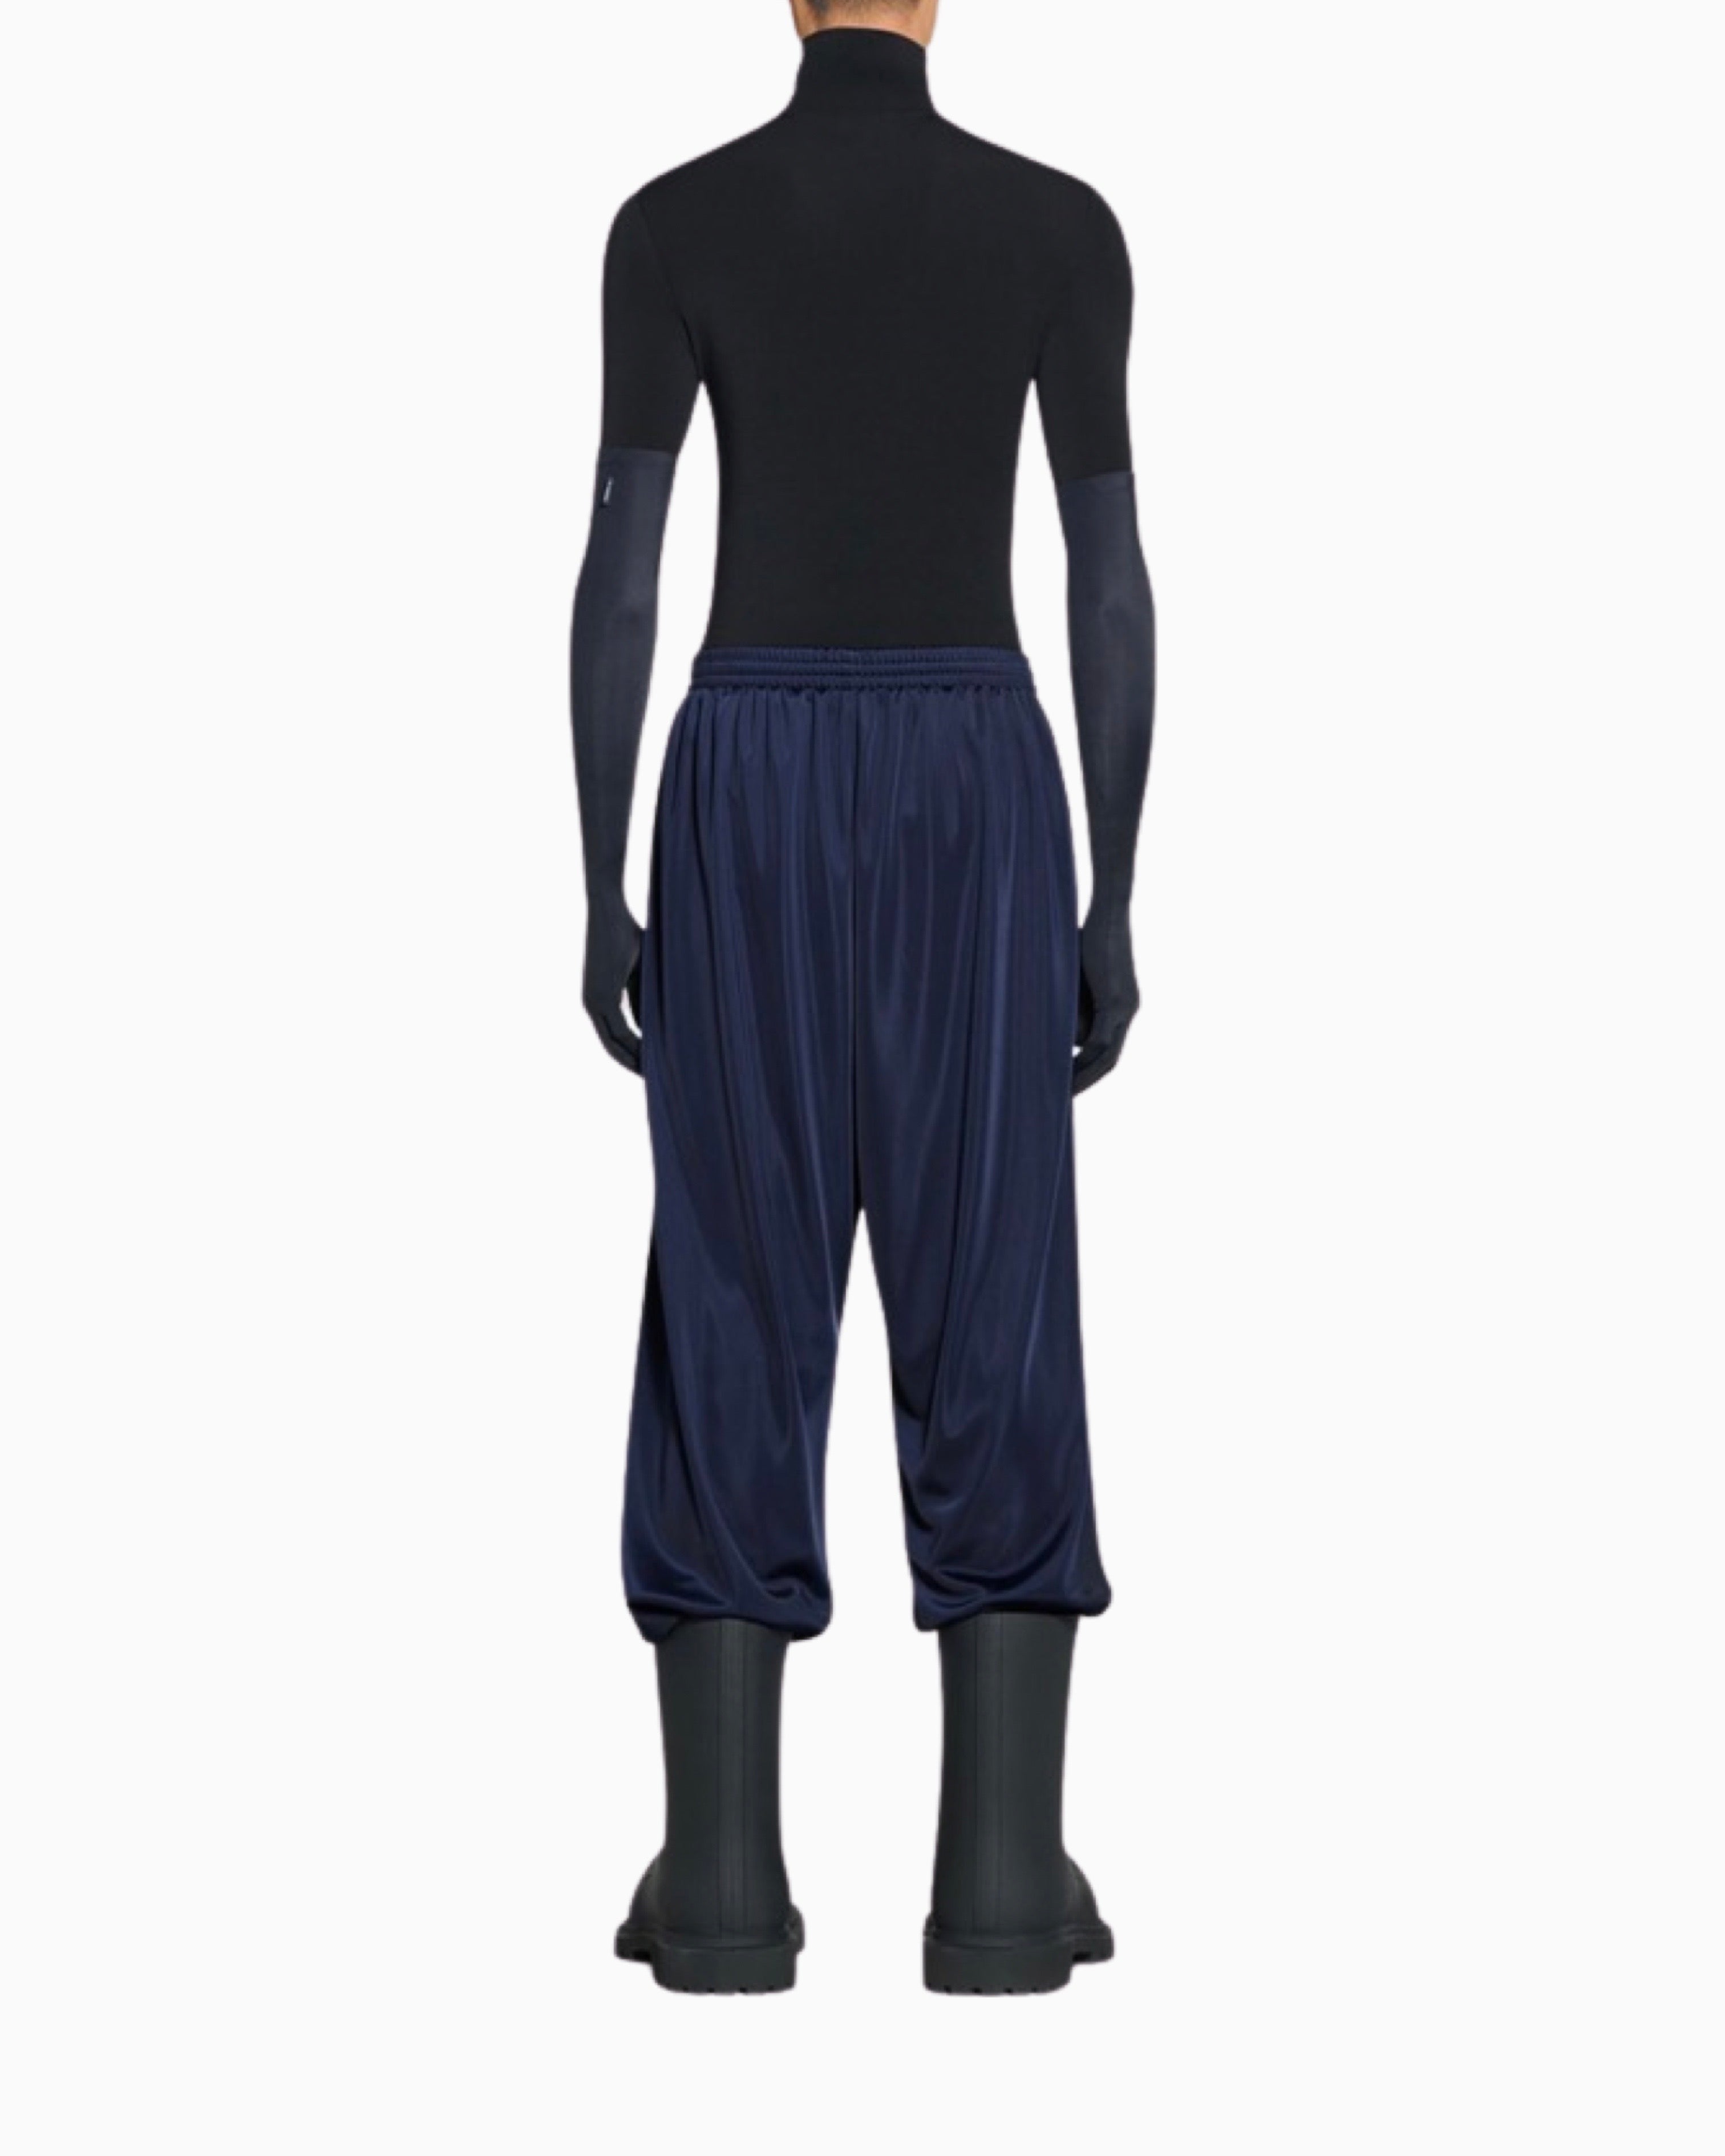 Balenciaga Garde-Robe Tracksuit Pants – FUTURO